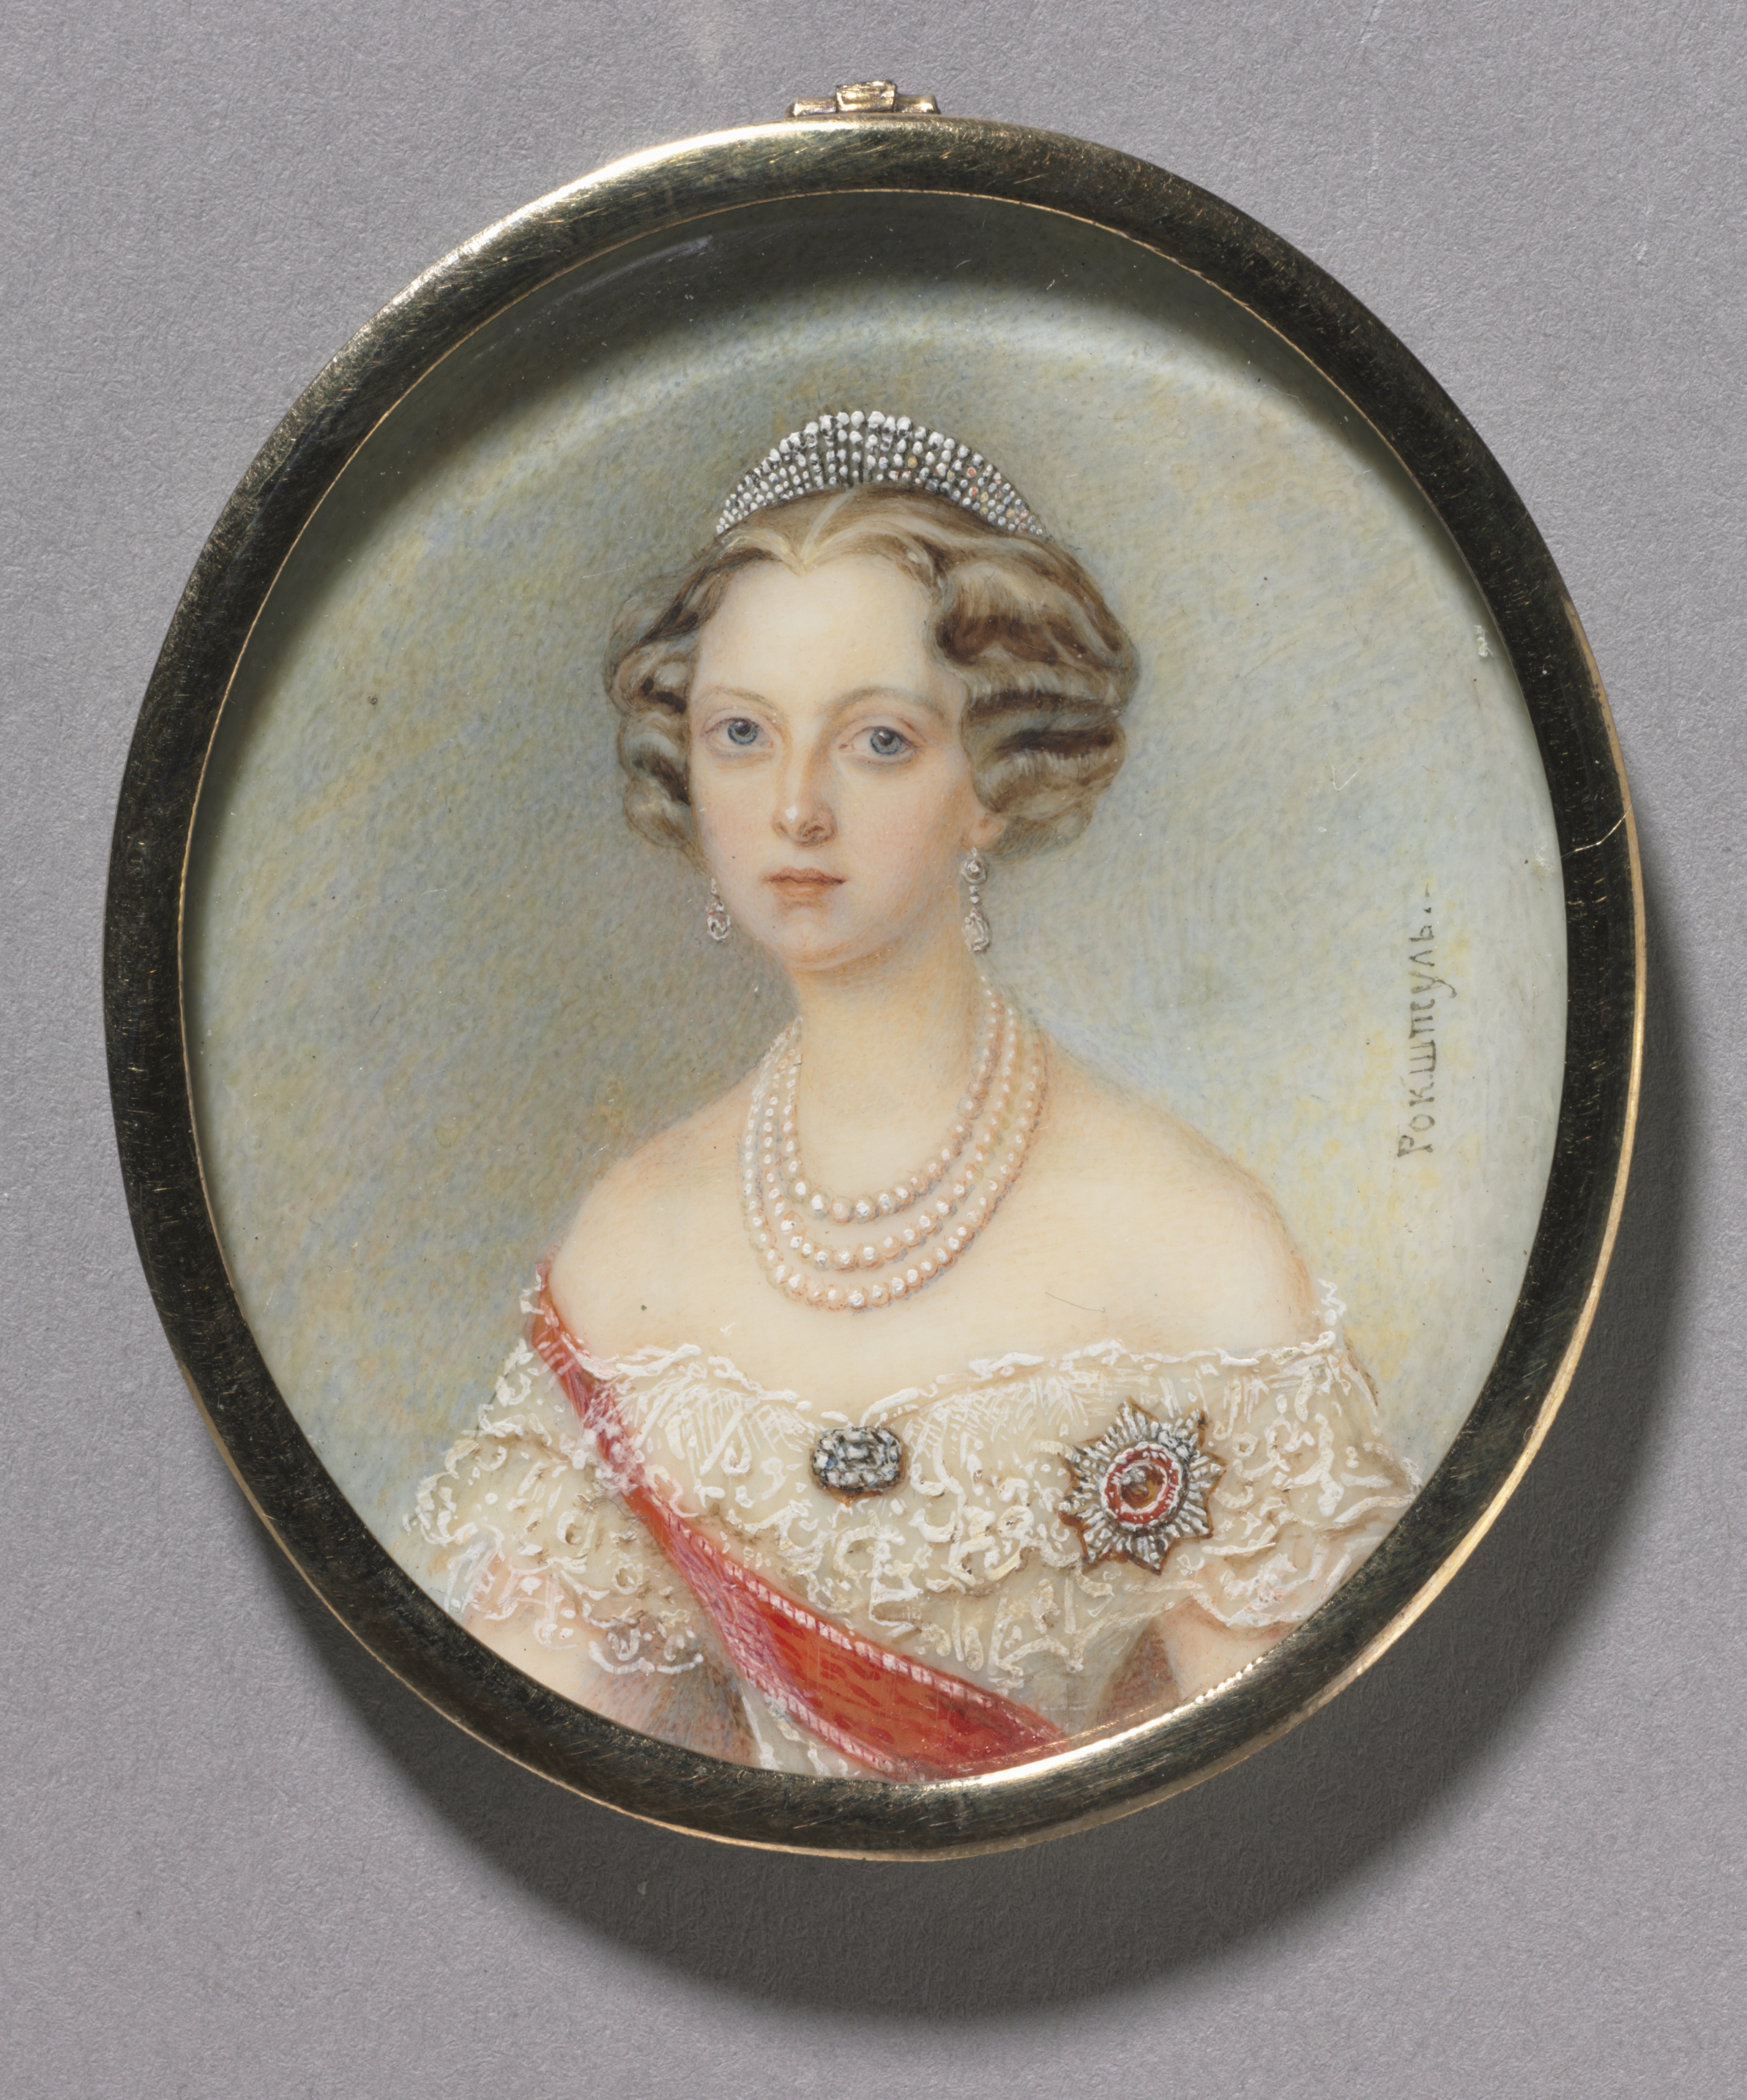 Portrait of a Woman, probably Princess Cecilie of Baden, Grand Duchess Olga Feodorovna